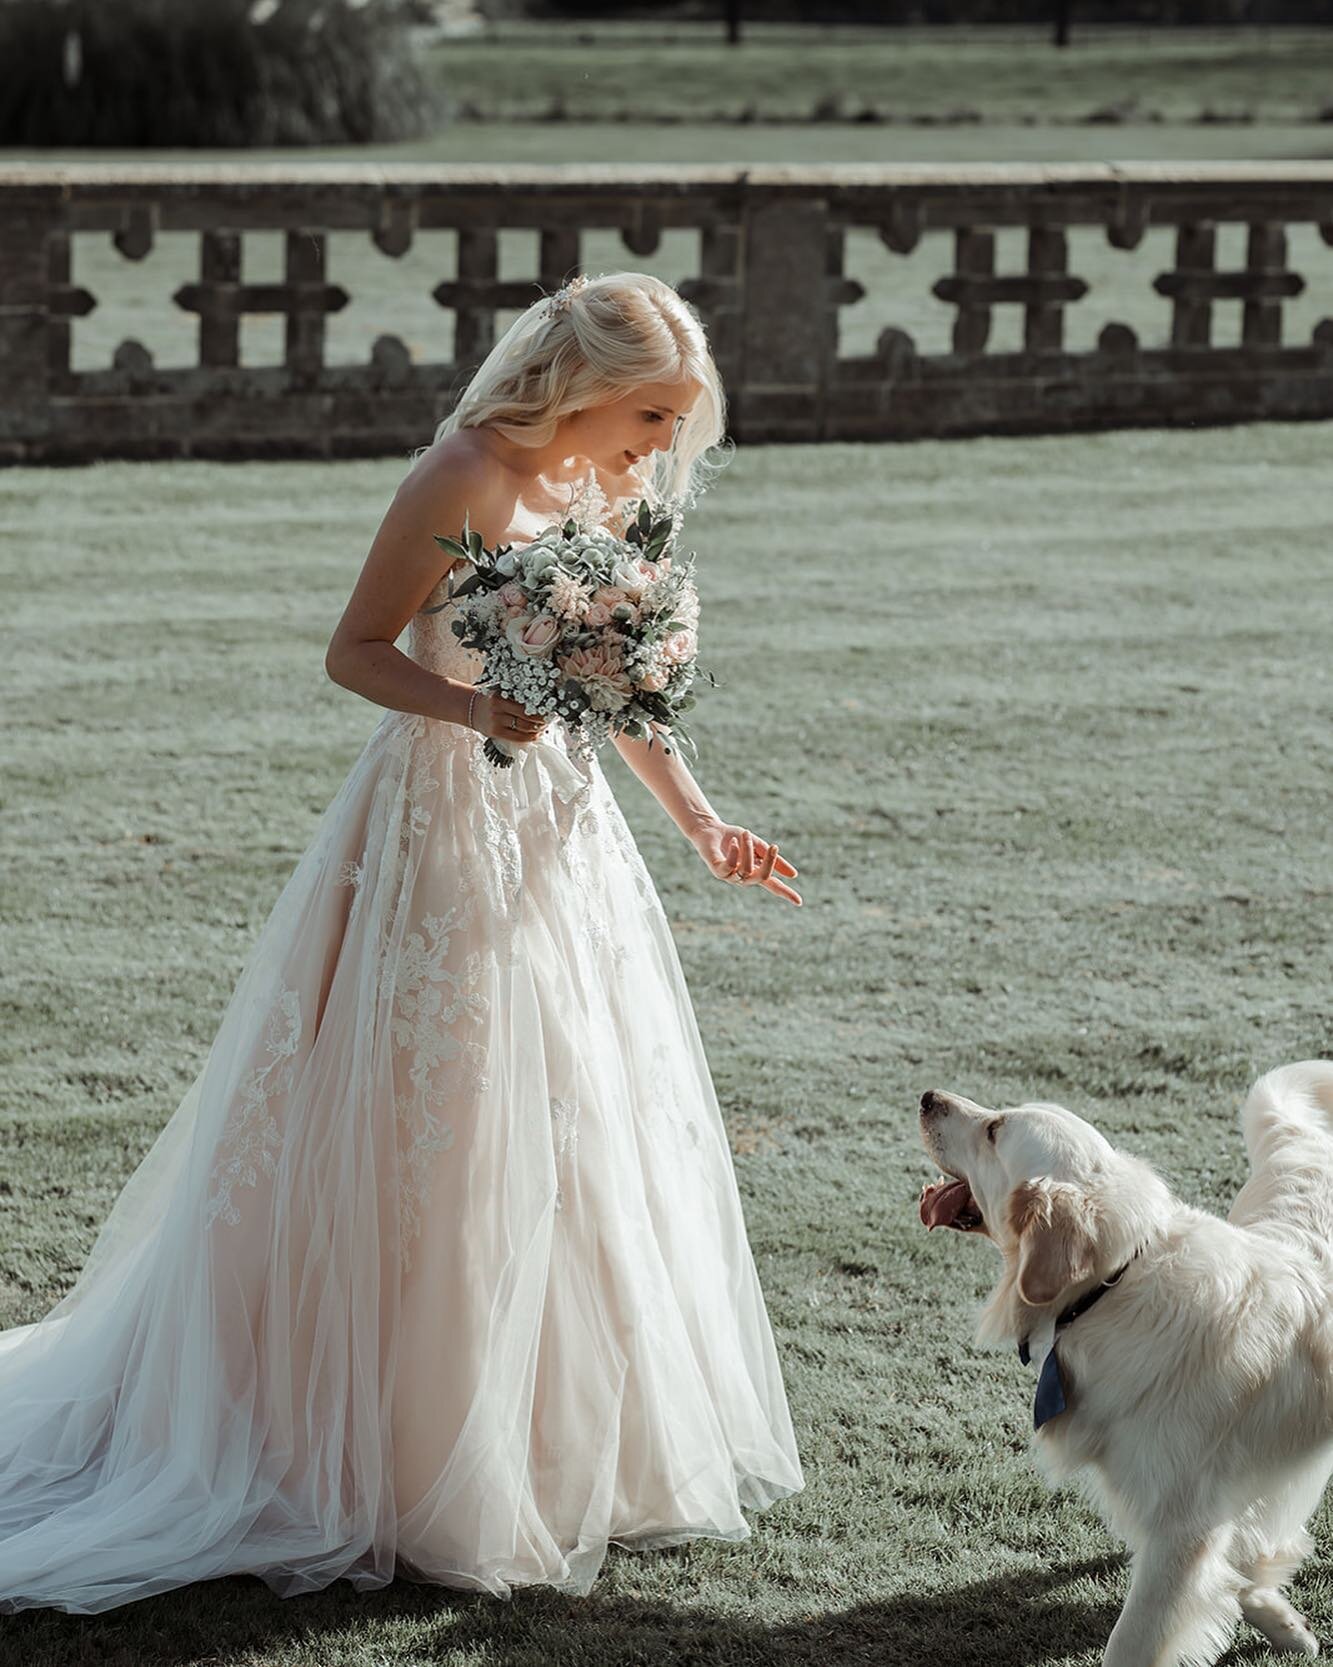 THE GOOD DOG // Such a dream having your best dog with you. 

Wedding: D&amp;C, September 2021
Photographer: @imogenevephotography 
Florist: @budandflower_ 

#balcombeplace #weddingvenue #sussexwedding #weddingdogs #bride #lovethatdress #weddingflowe